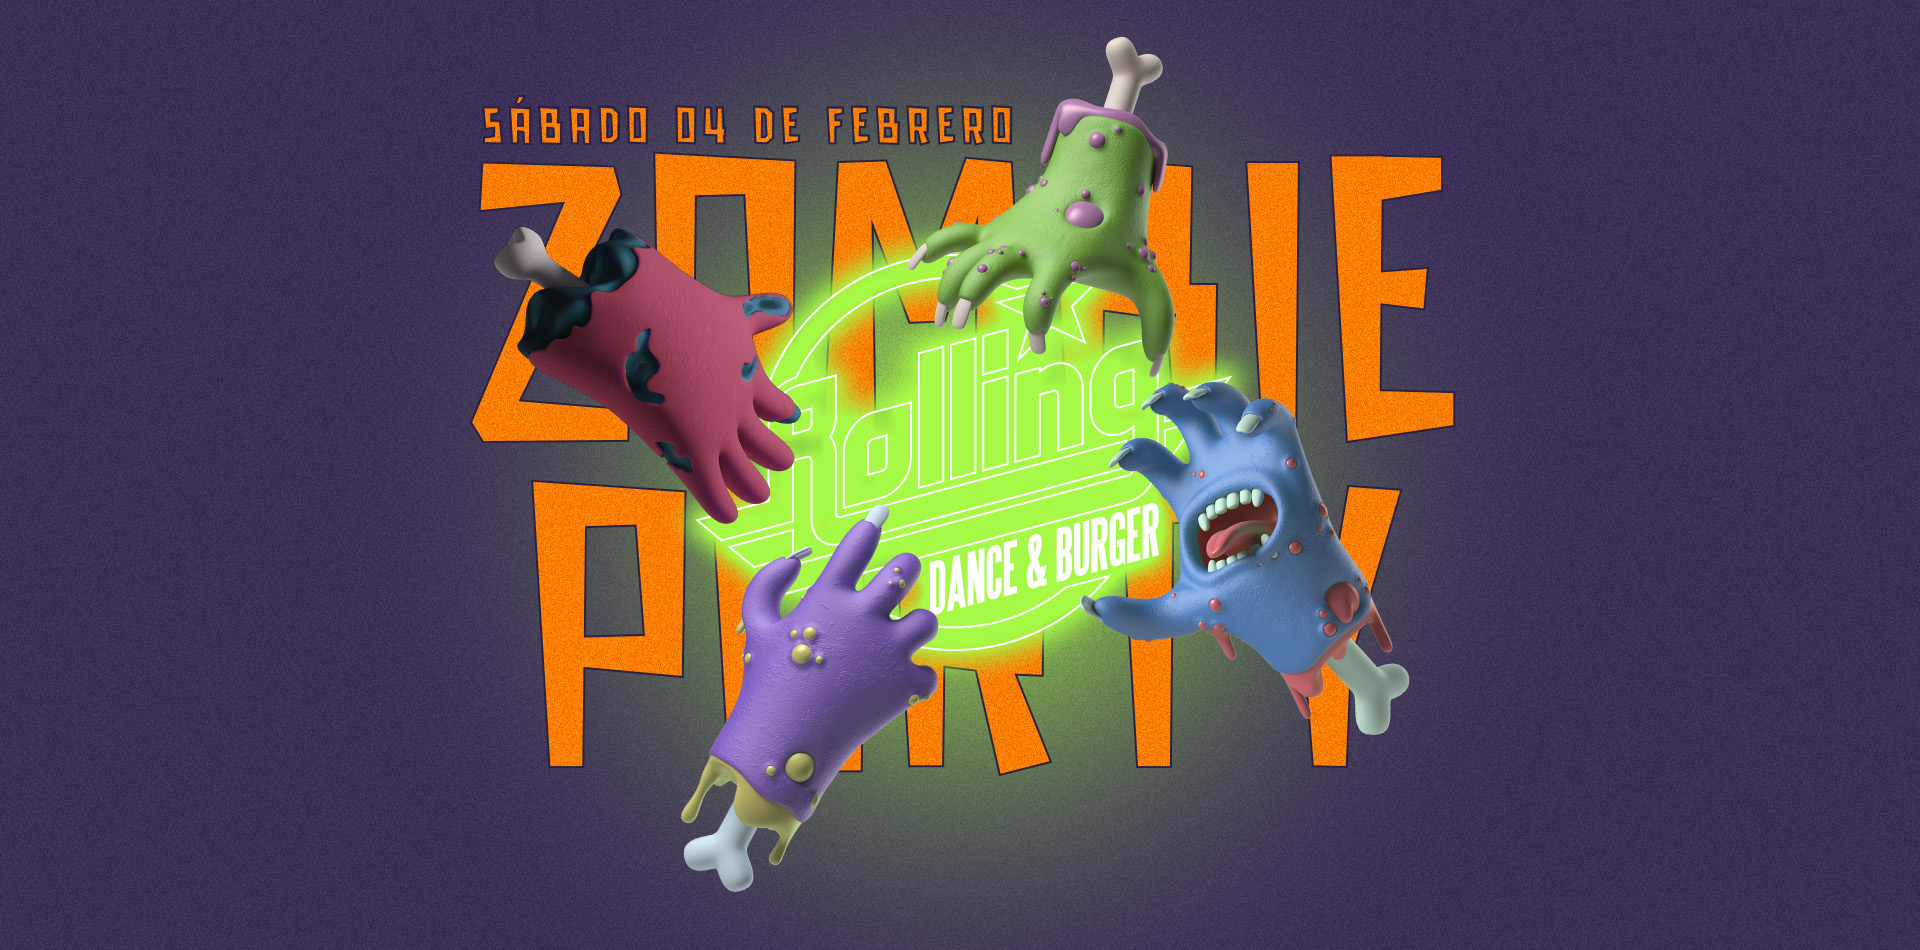 Accesos Zombie Party